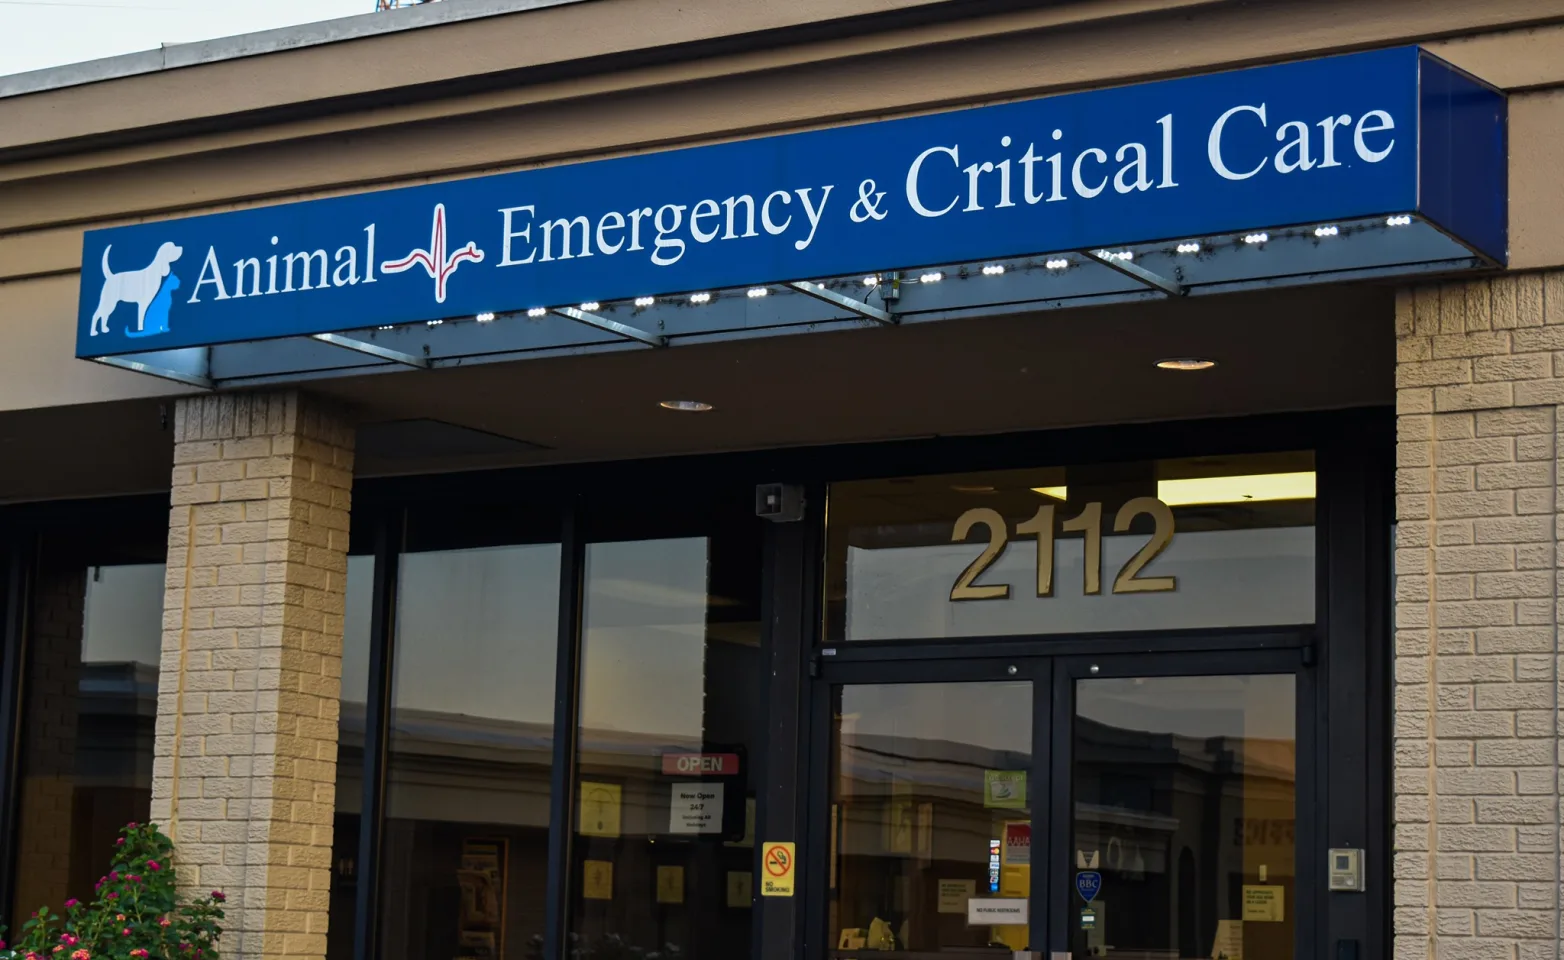 Animal Emergency & Critical Care, an emergency veterinarian in Huntsville, Alabama